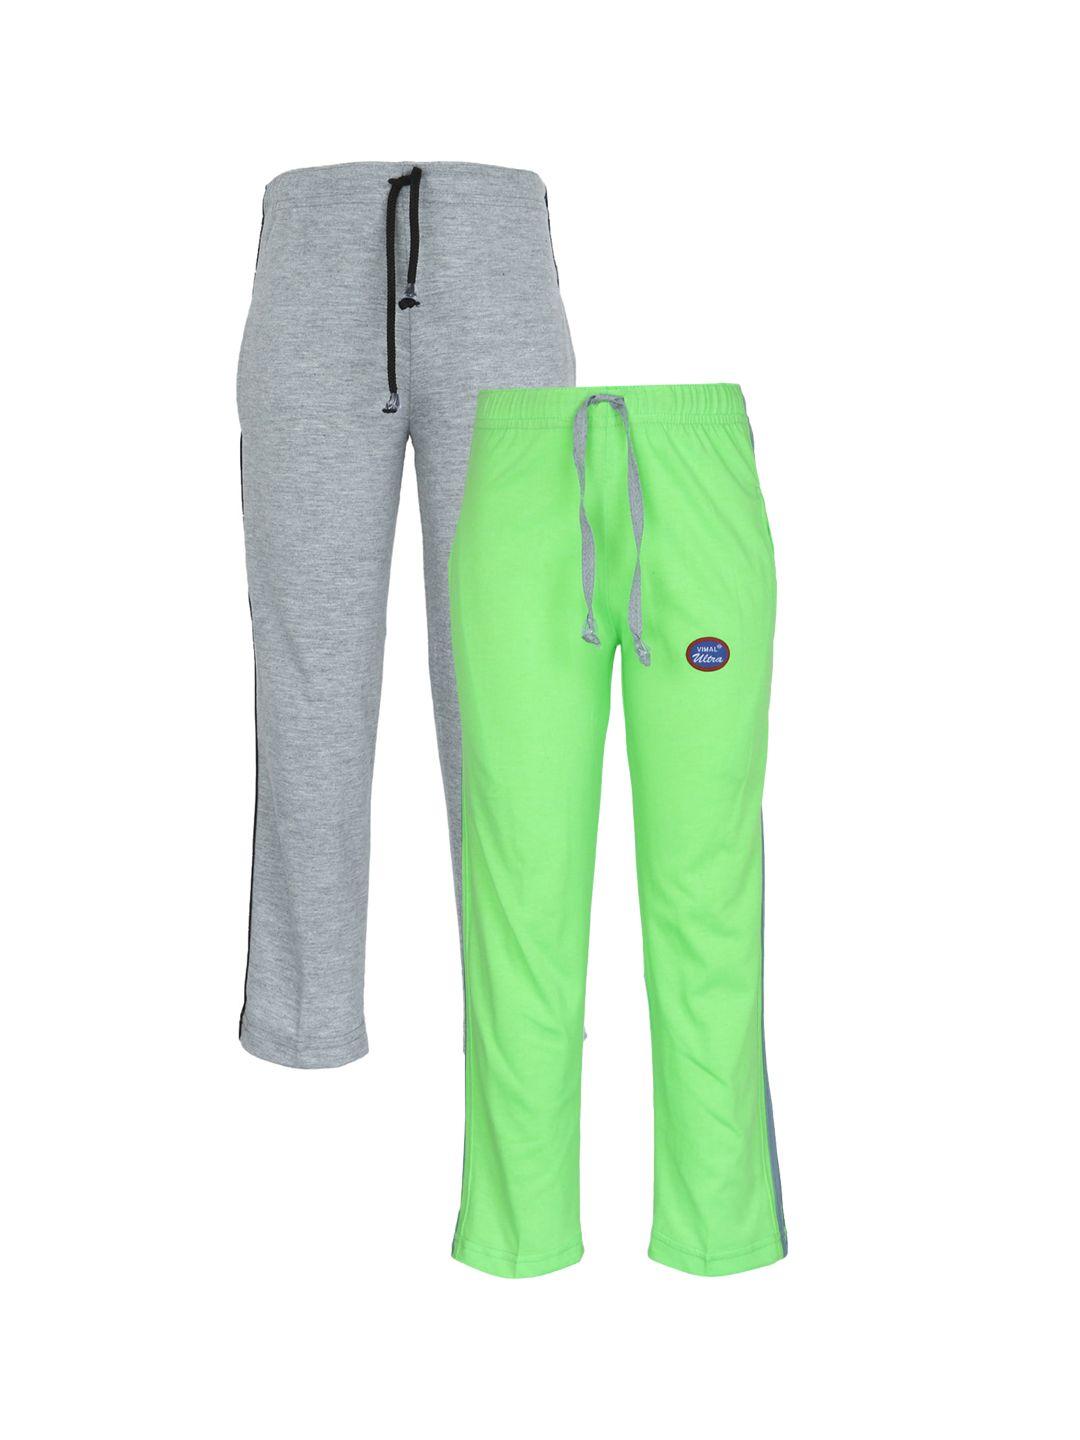 vimal jonney unisex kids grey  & fluorescent green set of 2 cotton blend track pants